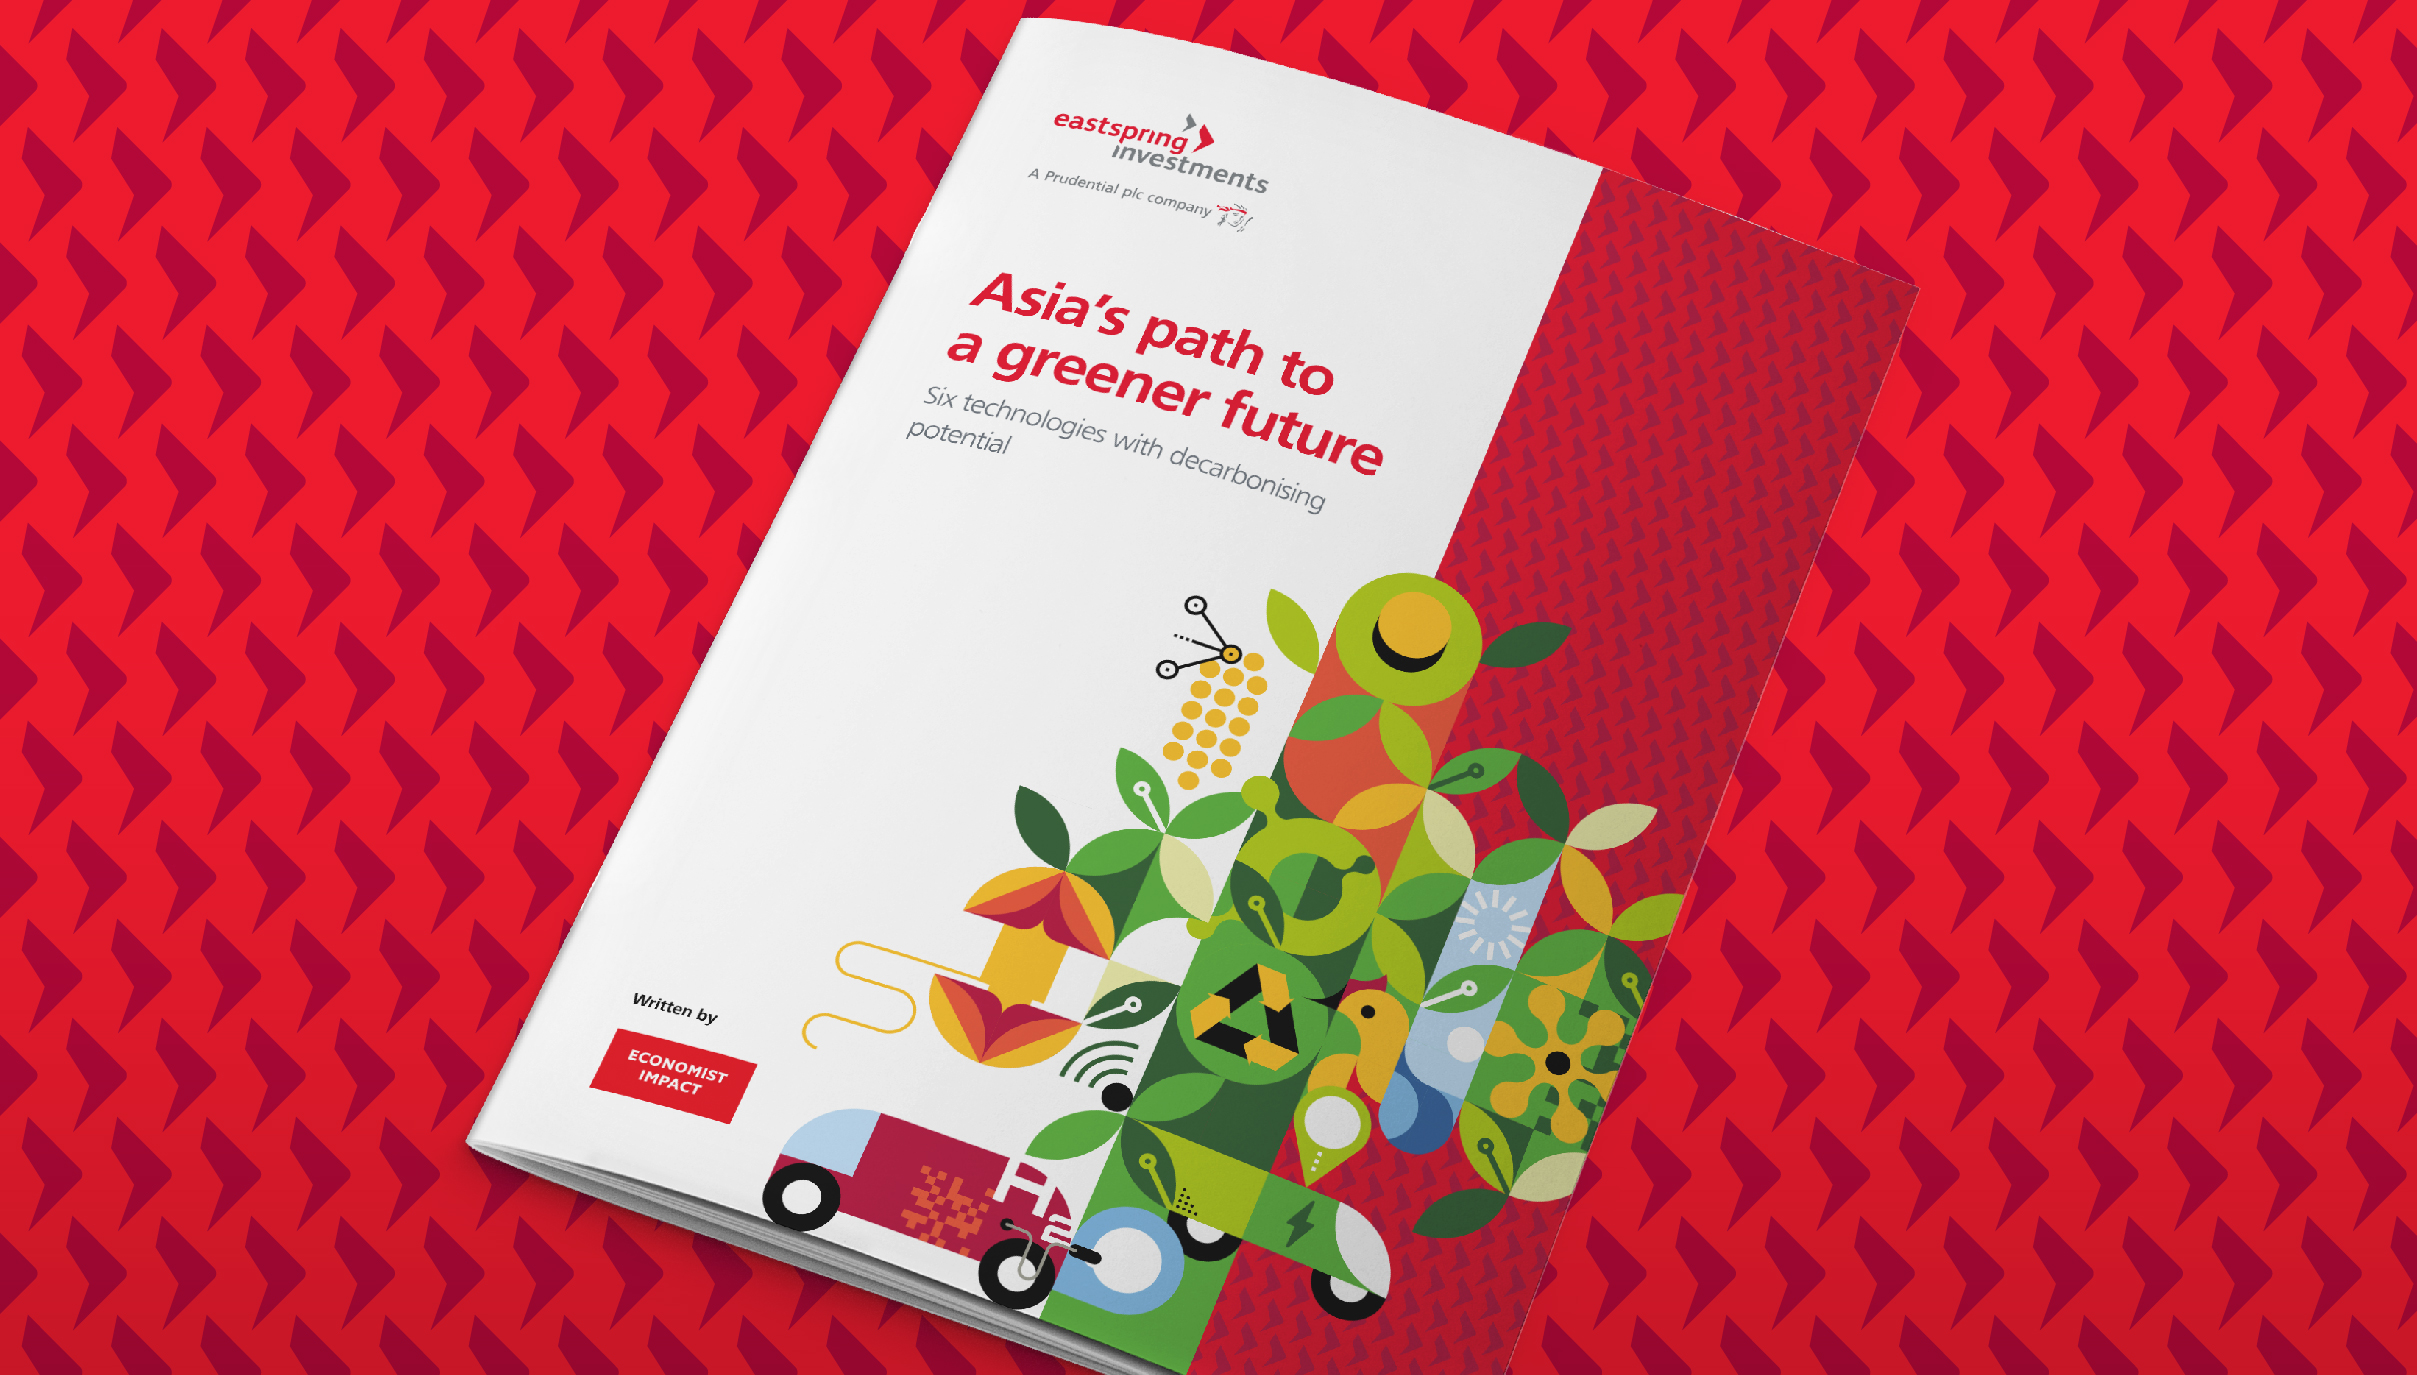 Asia's path to a greener future